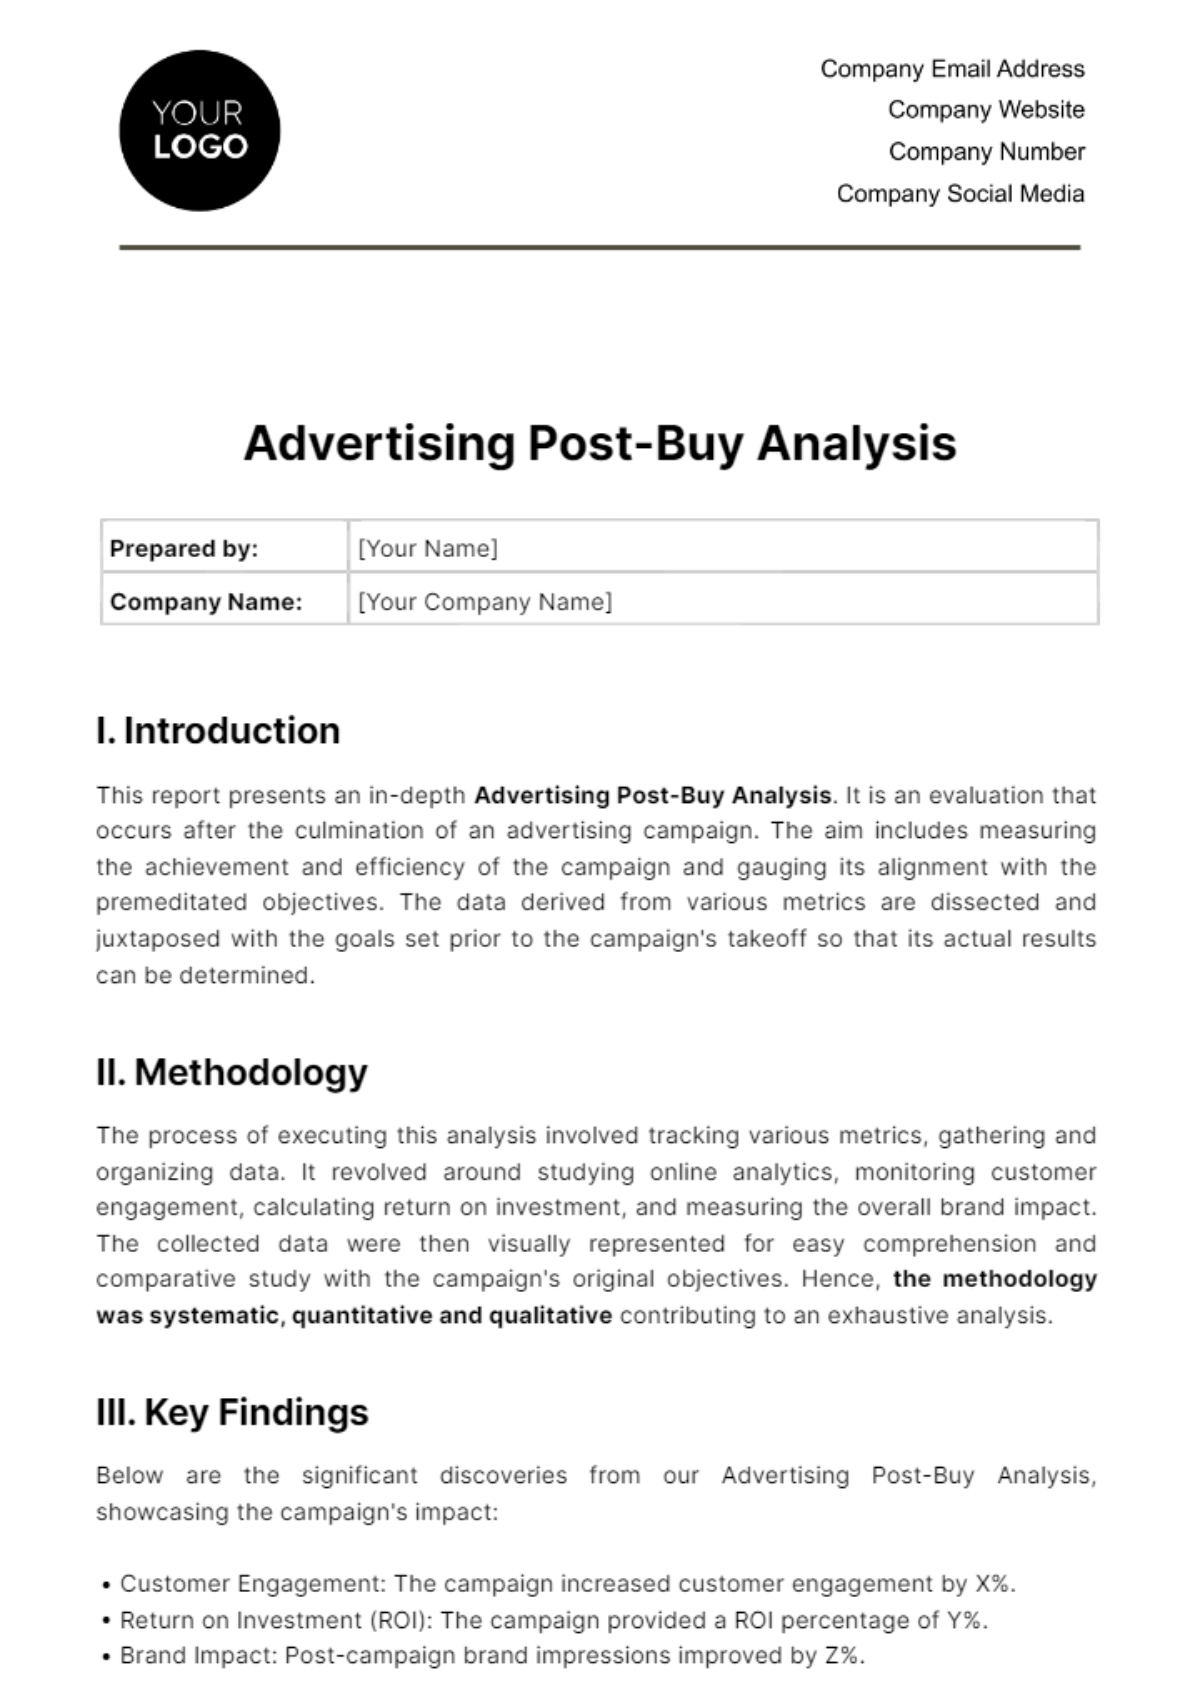 Advertising Post-Buy Analysis Template